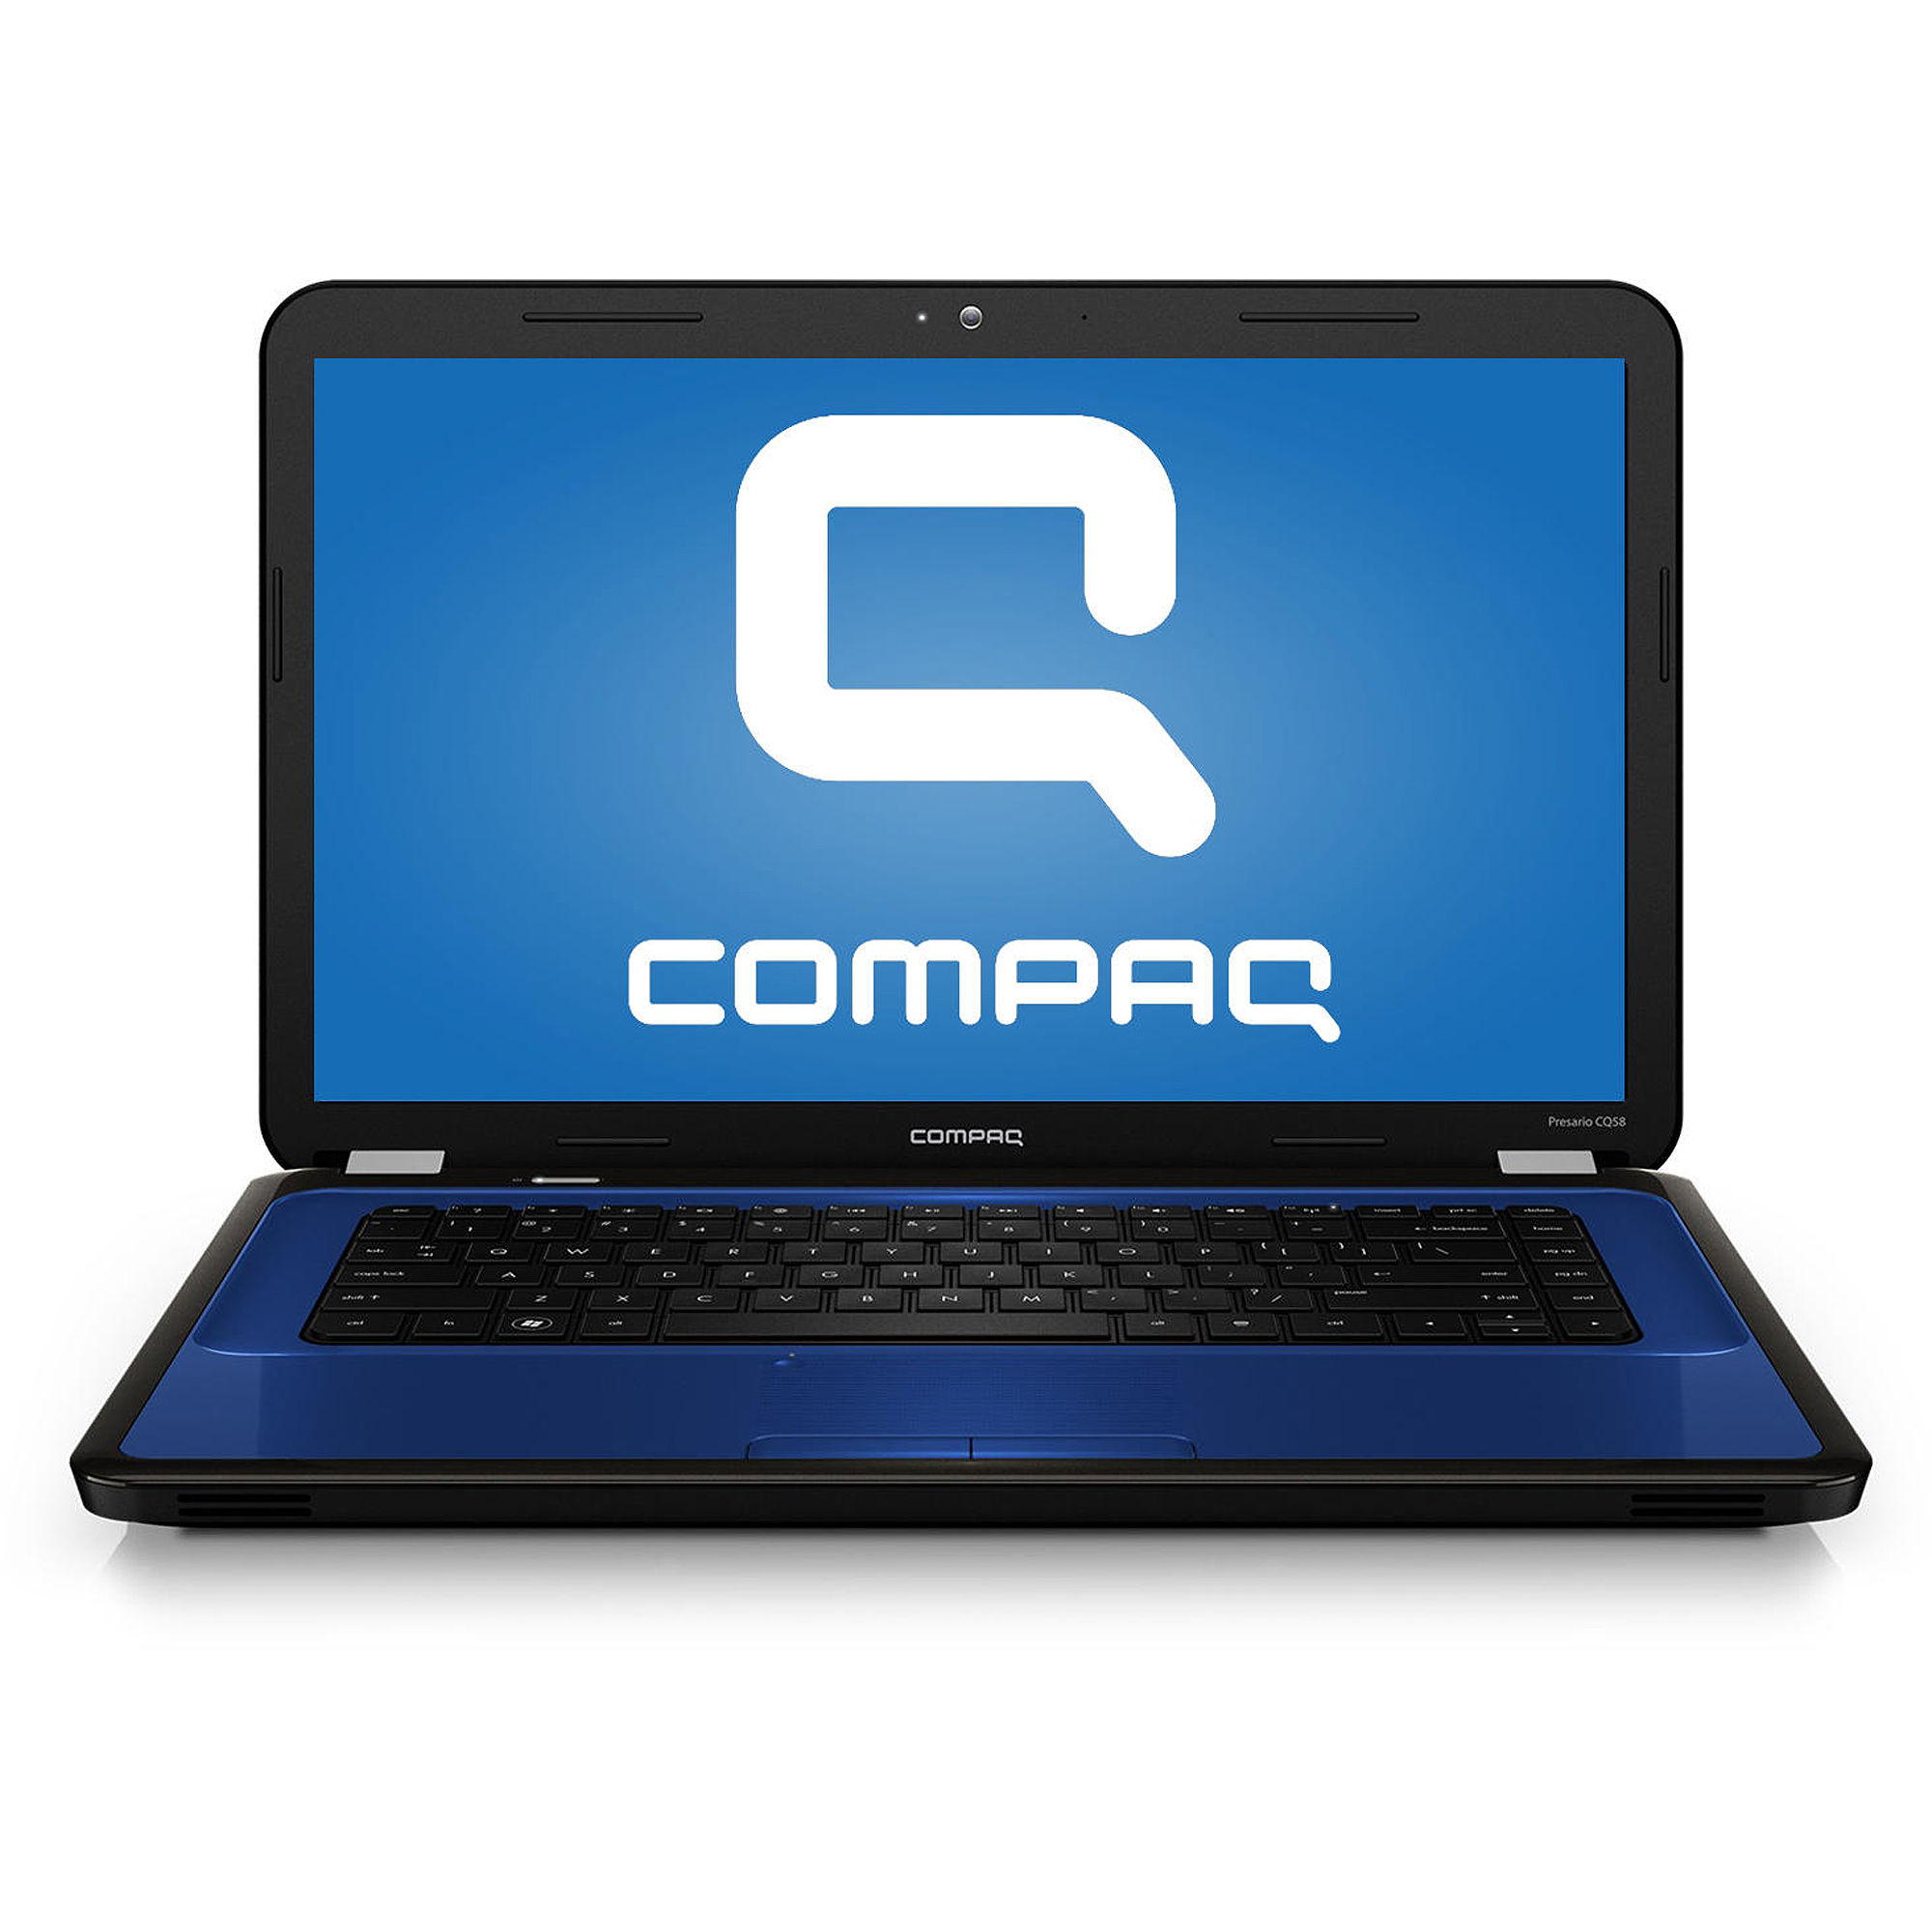 Restored Compaq Pacific Blue 15.6" CQ58-bf9WM Laptop PC with AMD Dual-Core C-80 Processor, 2GB Memory, 320GB Hard Drive and Windows 8 (Refurbished) - image 1 of 4